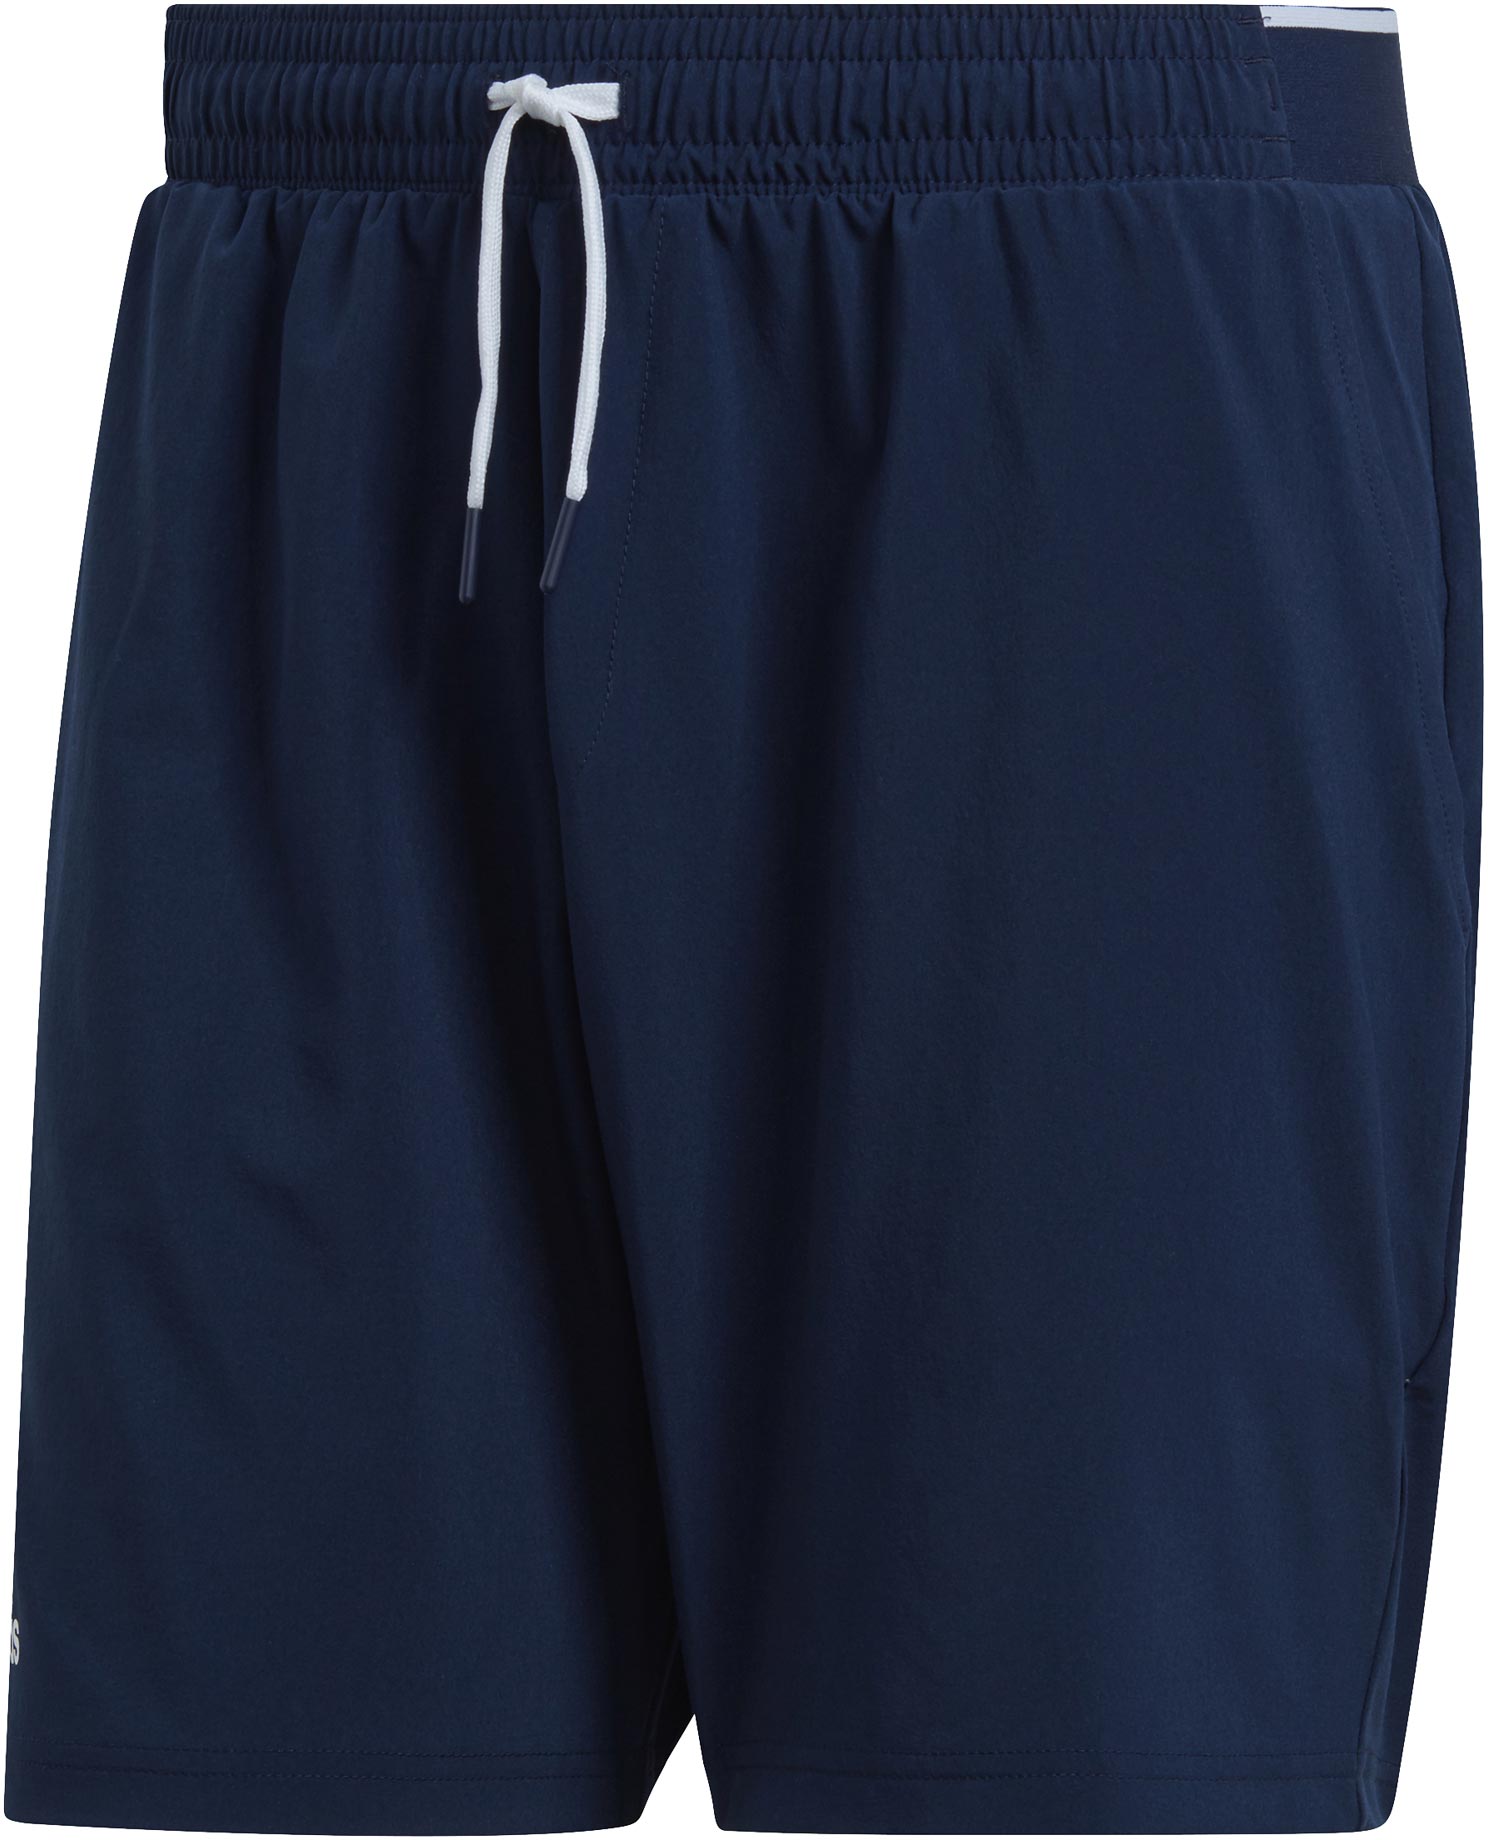 Men’s tennis shorts